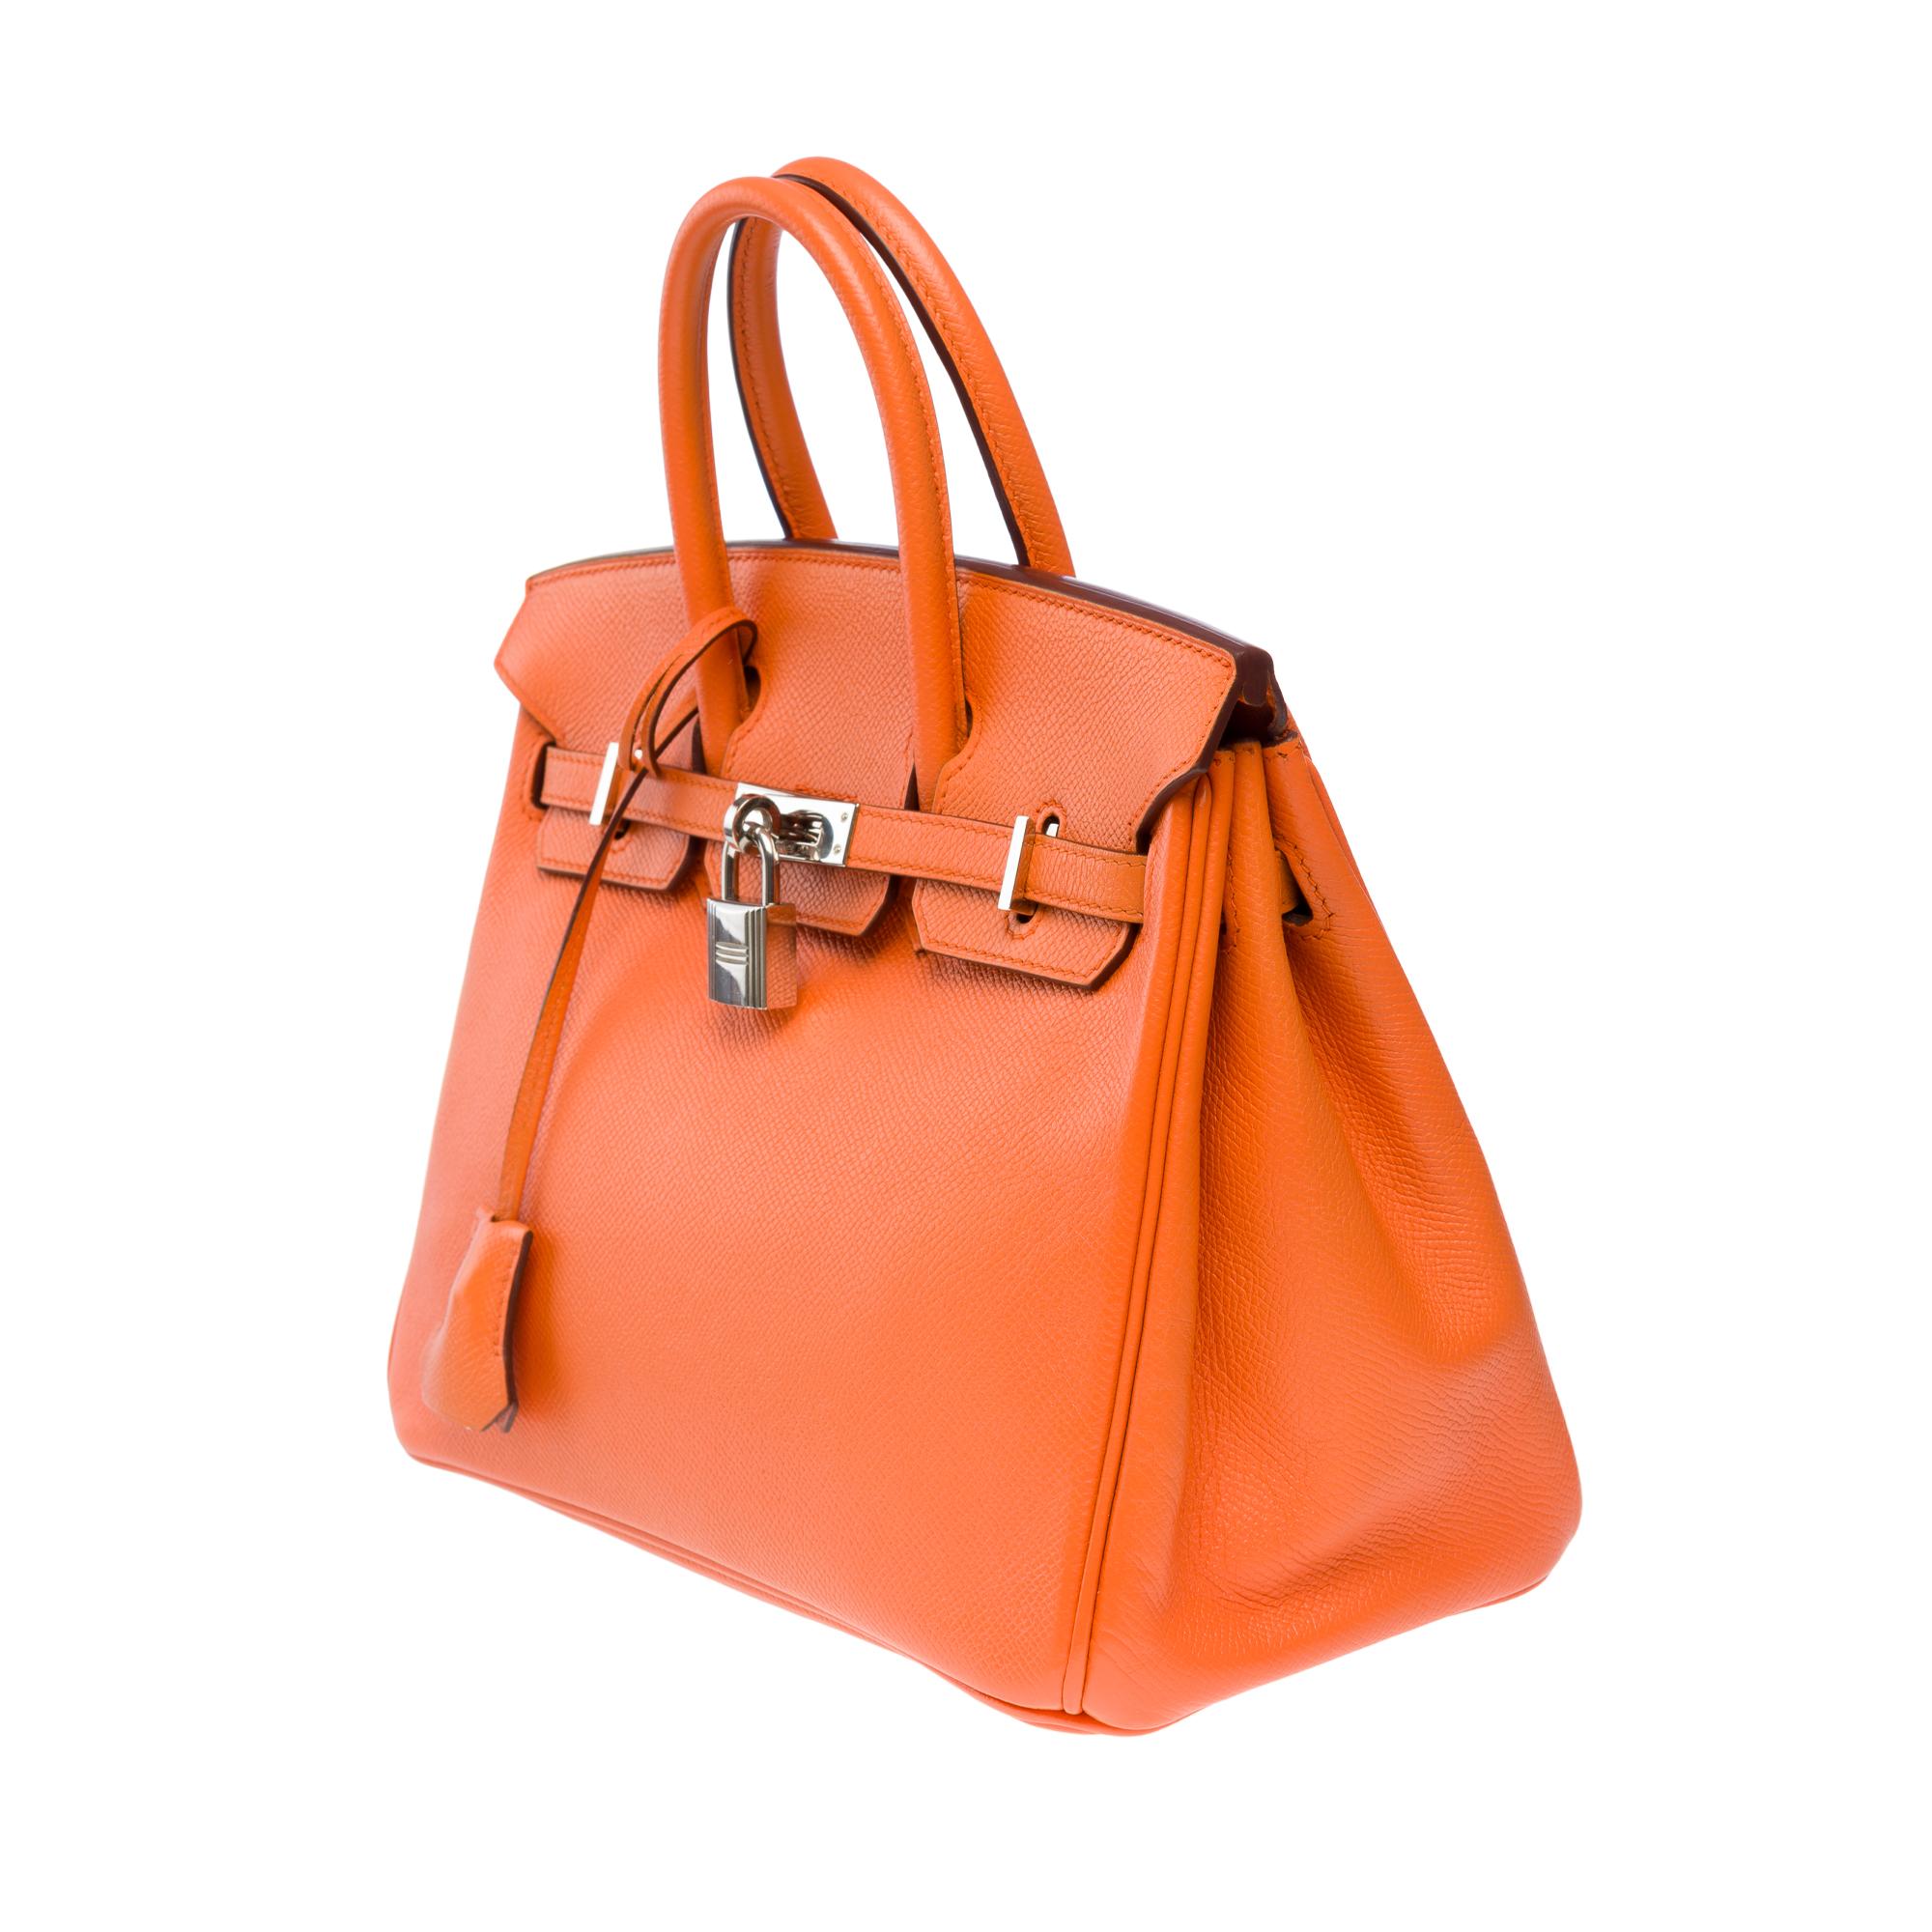 Bright Hermes Birkin 25cm handbag in Orange Epsom calf leather, SHW For Sale 2